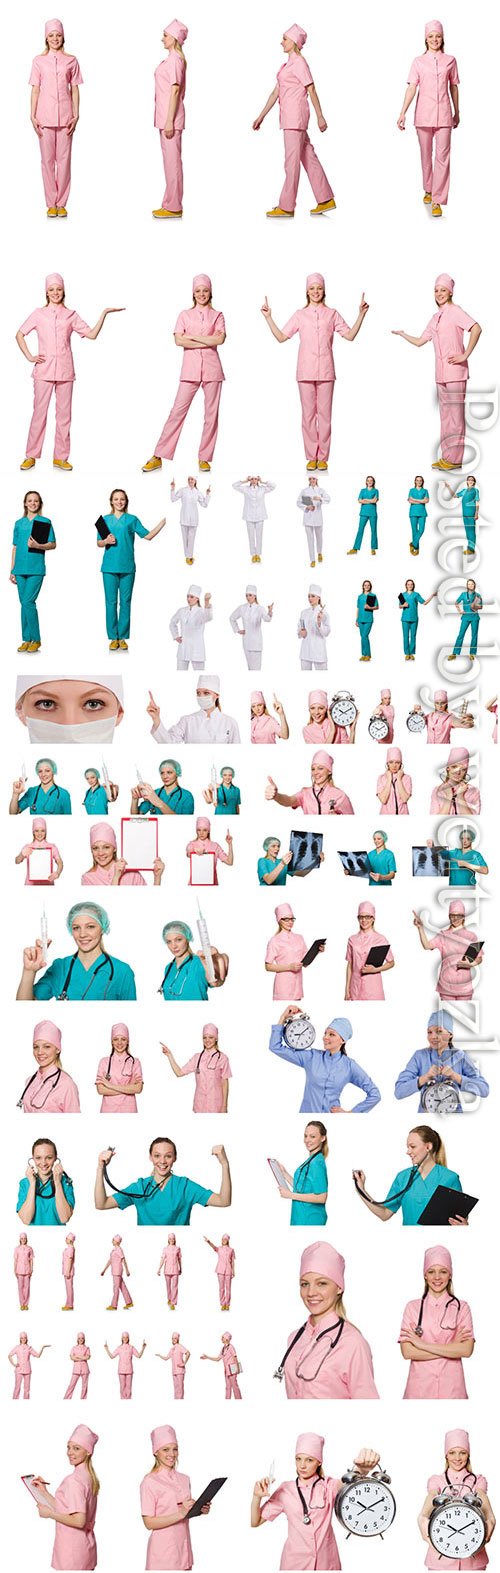 Female doctors in professional uniform stock photo